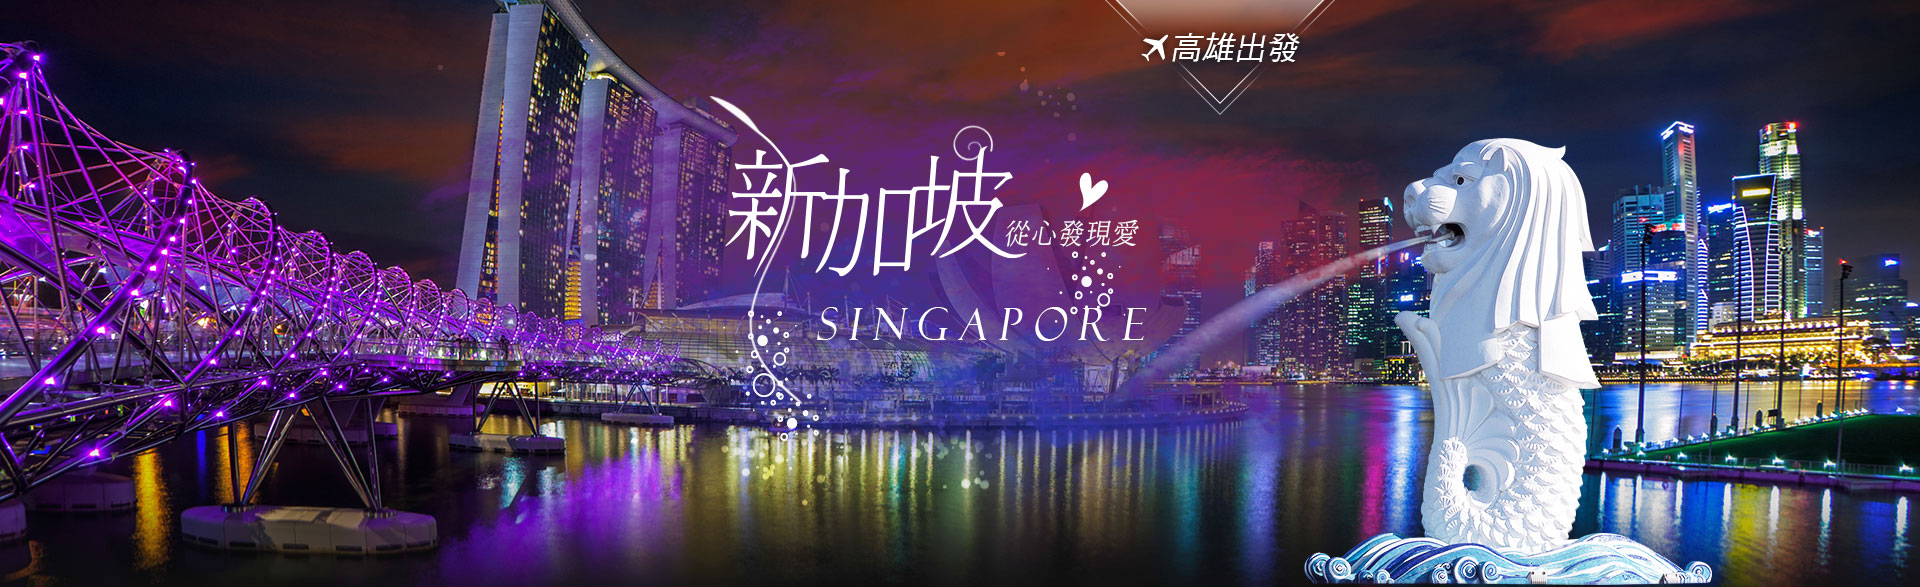 新加坡Singapore